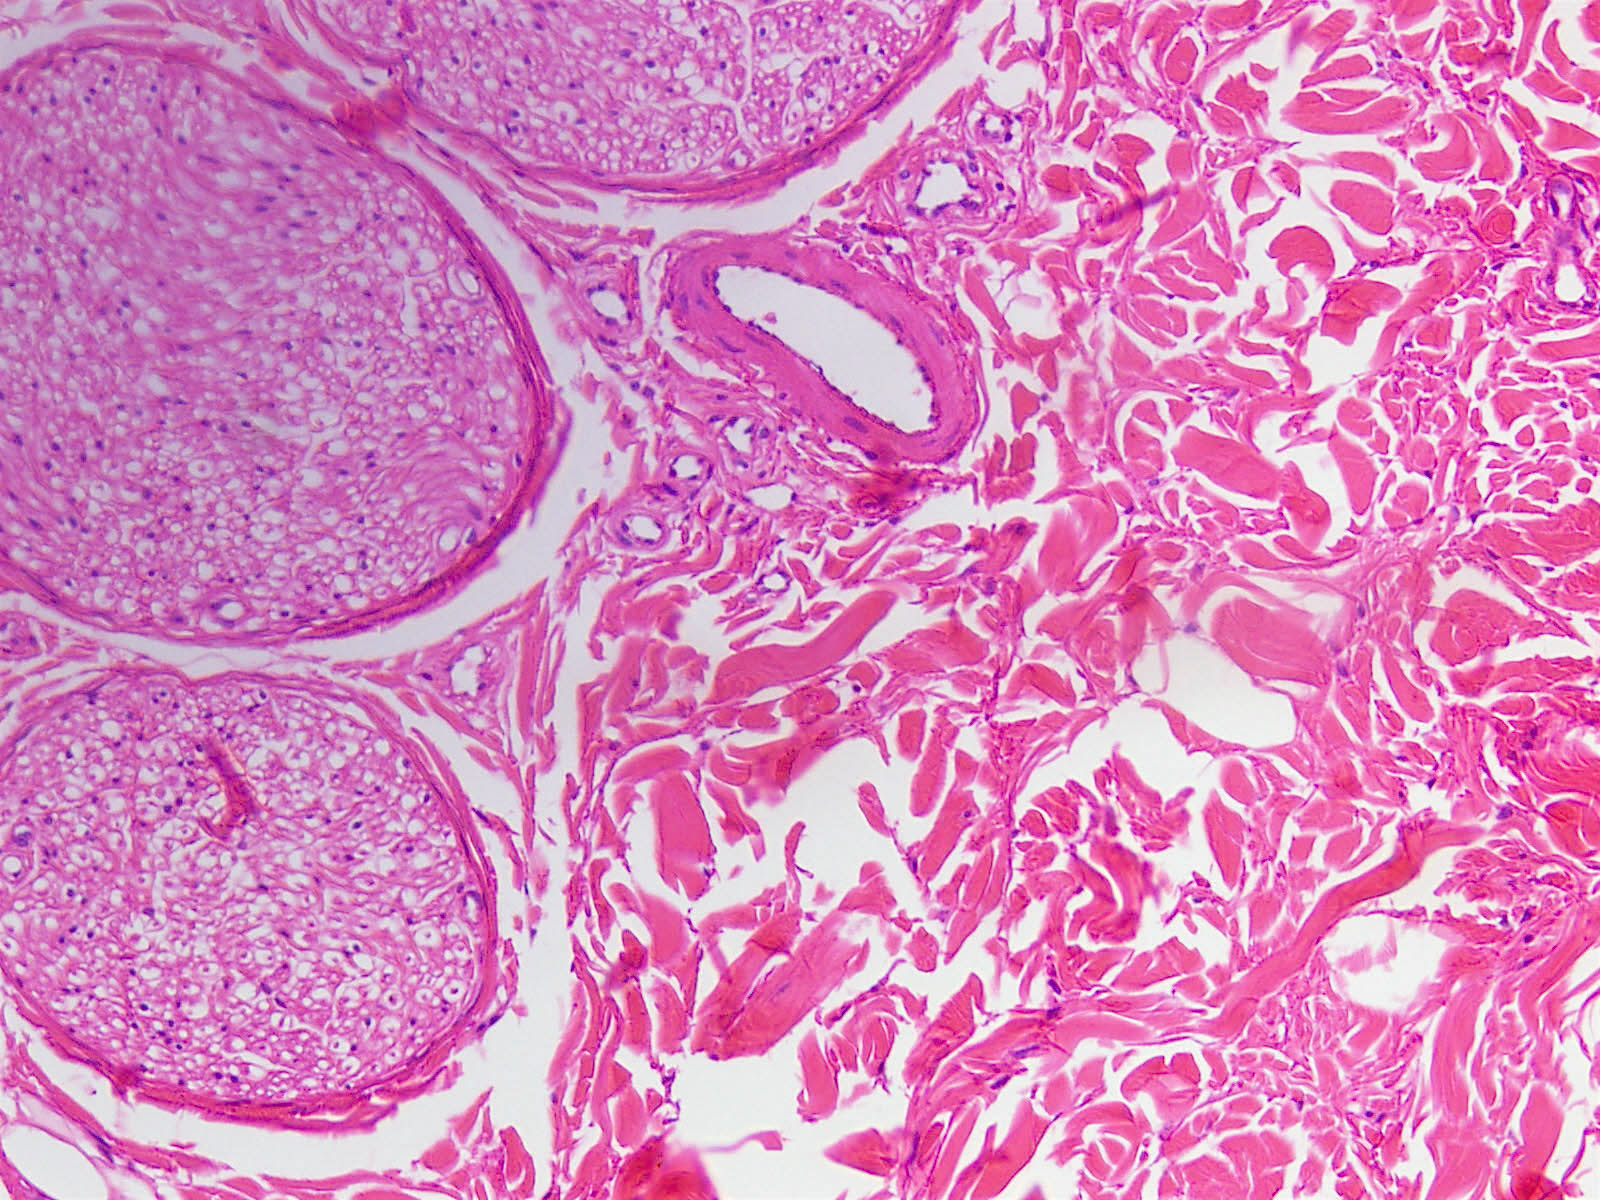 1600 x 1200 - jpeg. pathology outlines nuchal type gardner fibroma. 